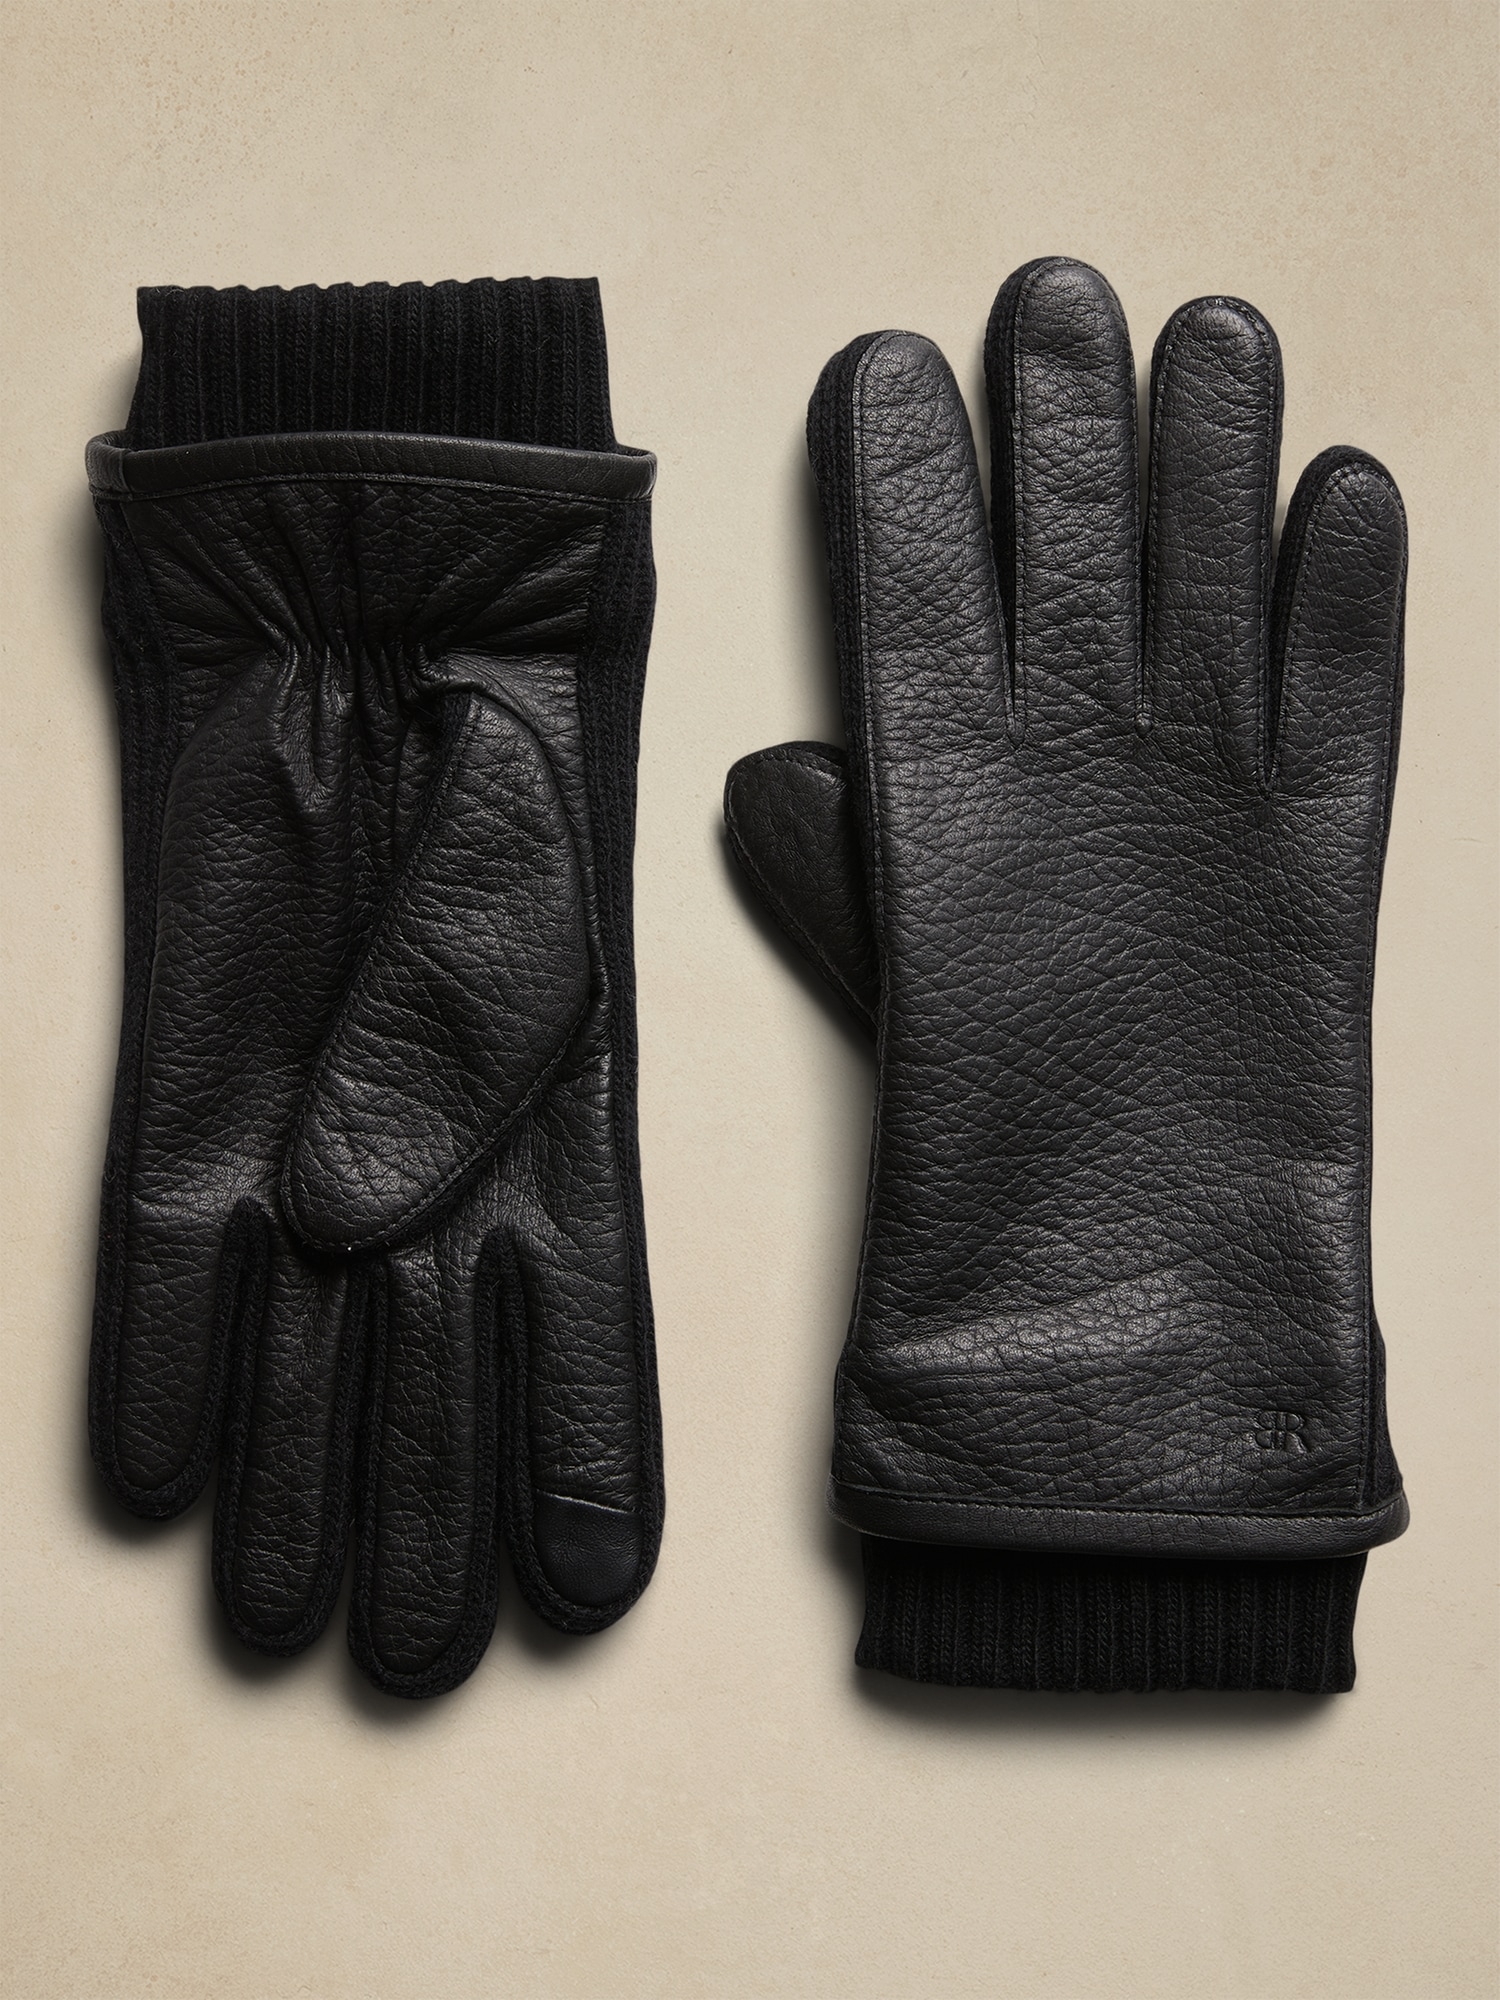 Knit Cuff Leather Gloves Banana Republic